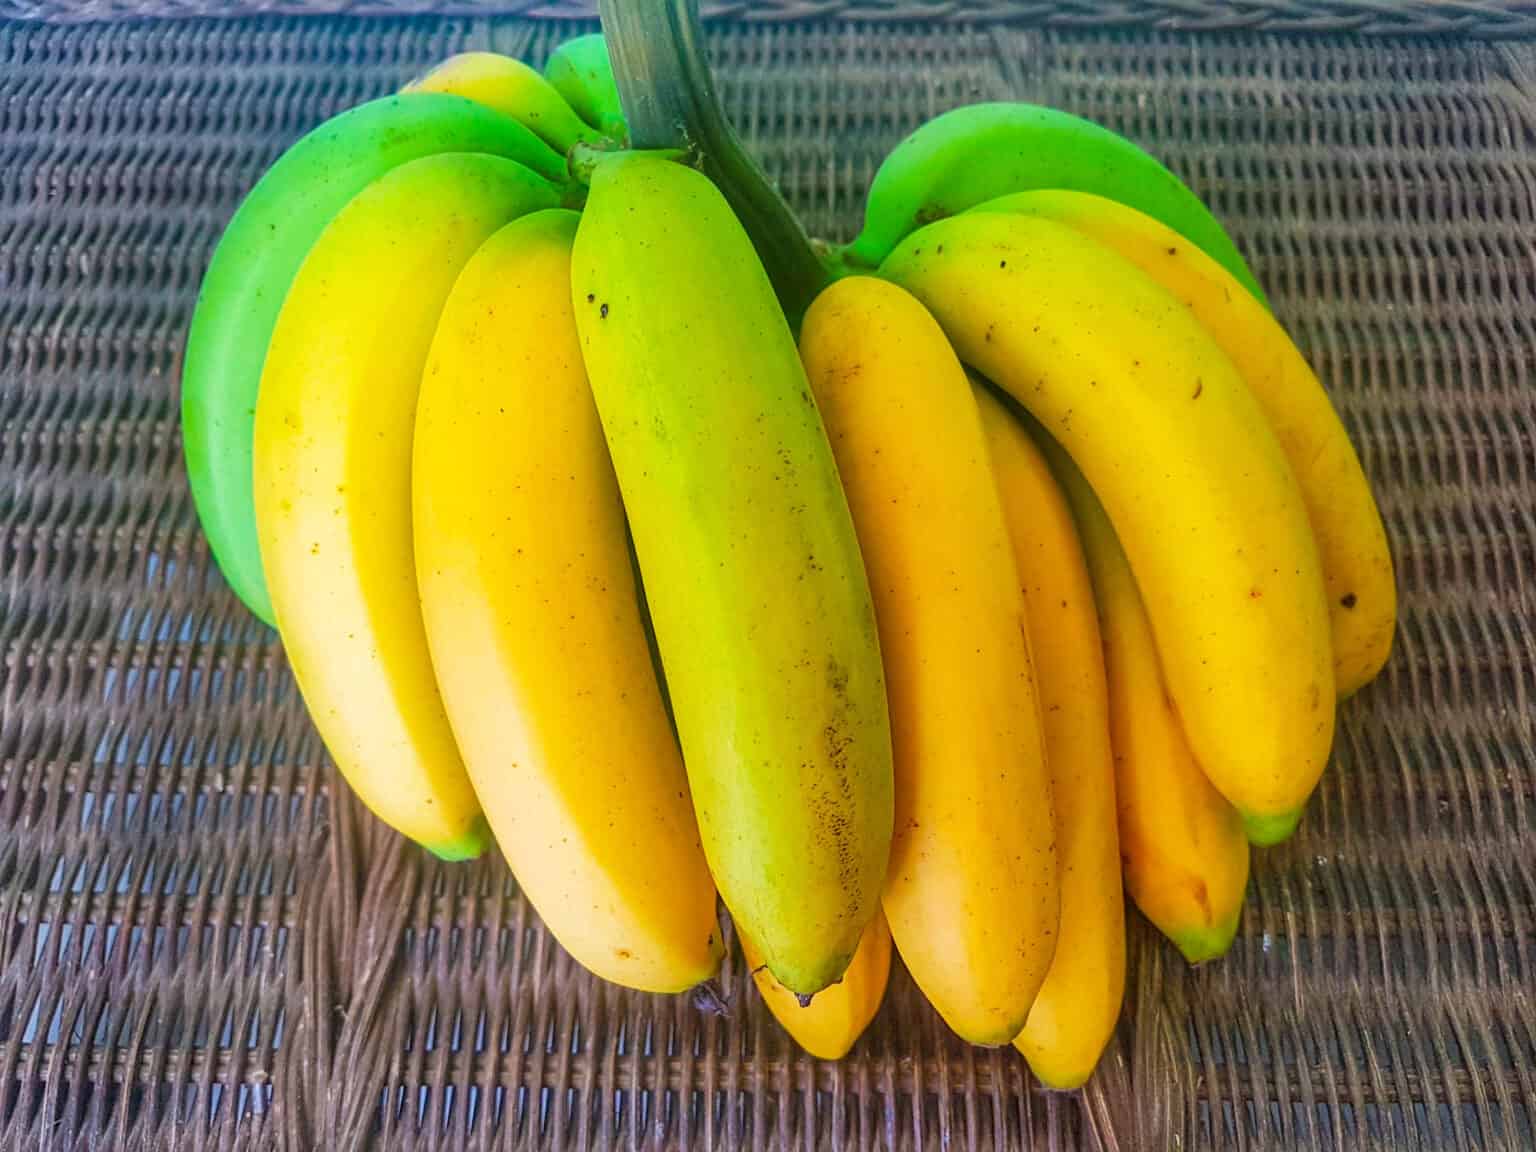 Are Bananas Going Extinct? AZ Animals